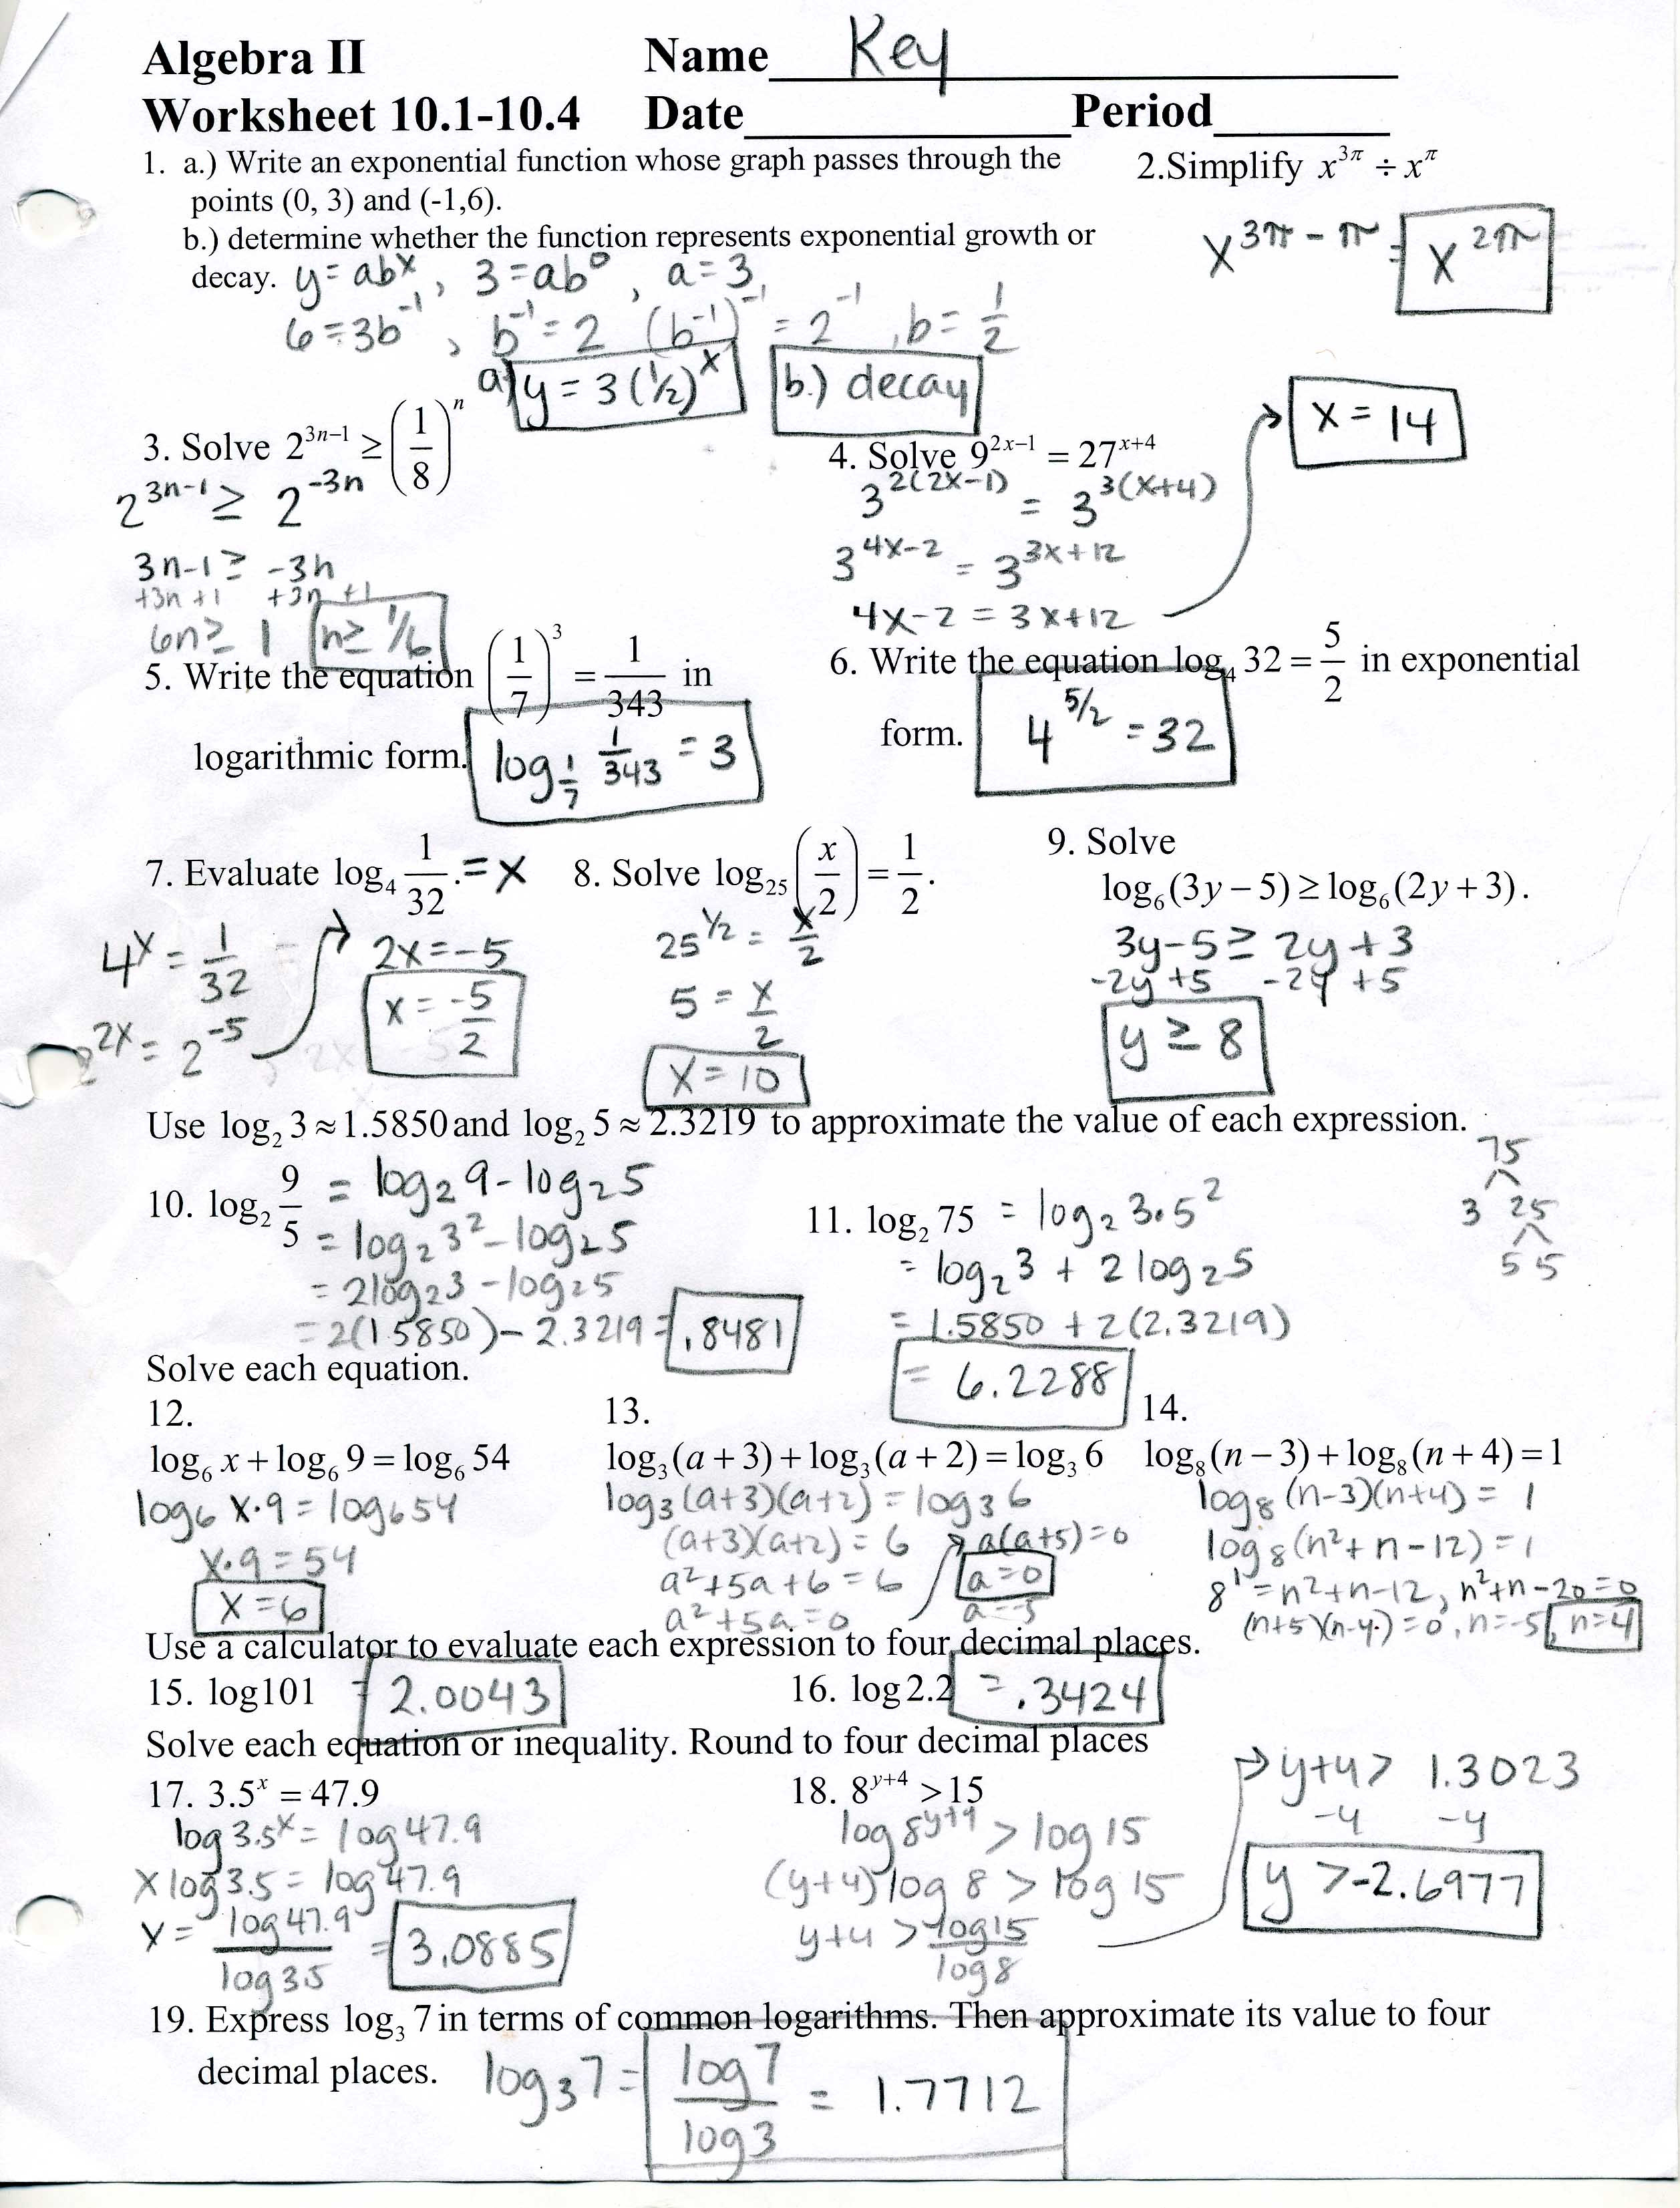 multiplying-and-dividing-rational-expressions-worksheet-glencoe-algebra-2-leonard-burton-s